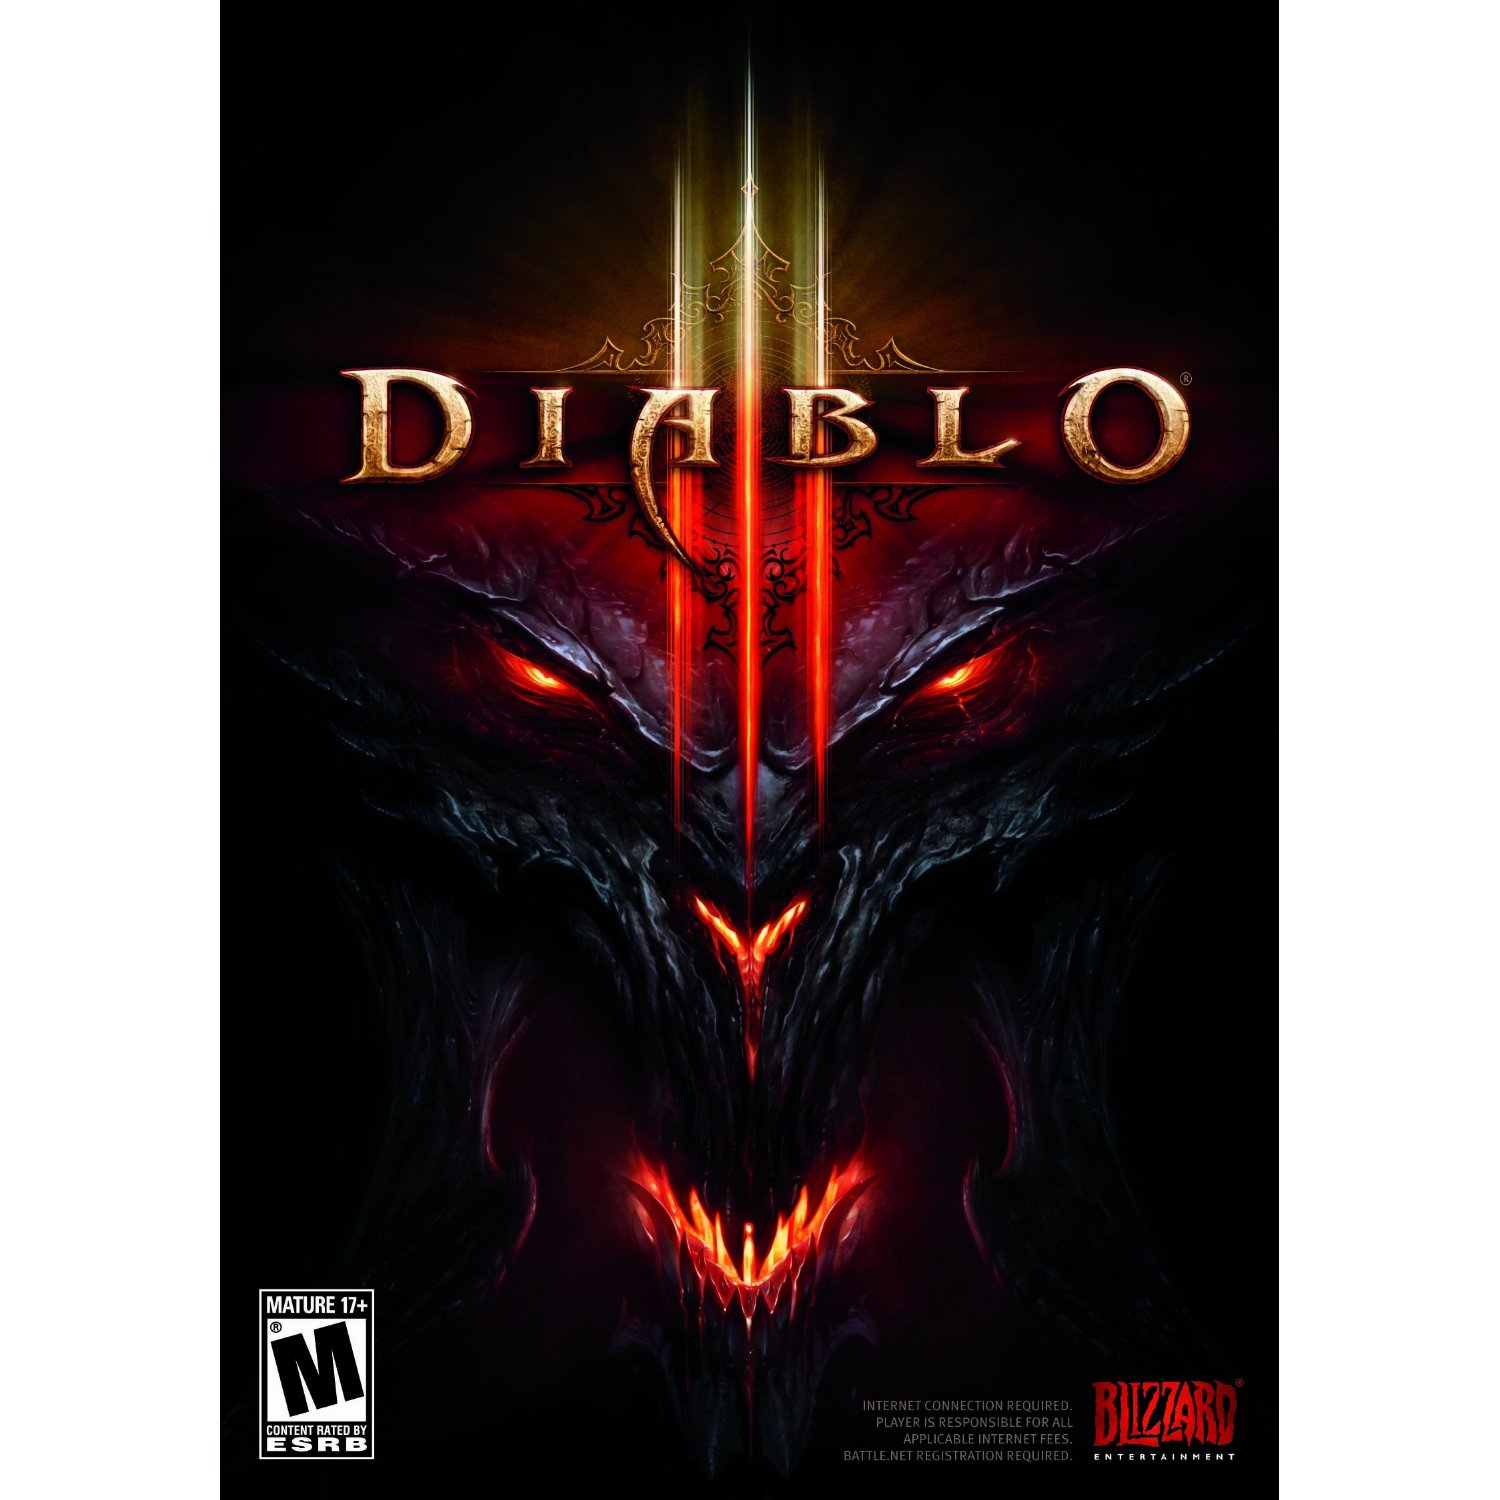 Diablo III Release Date Rumors